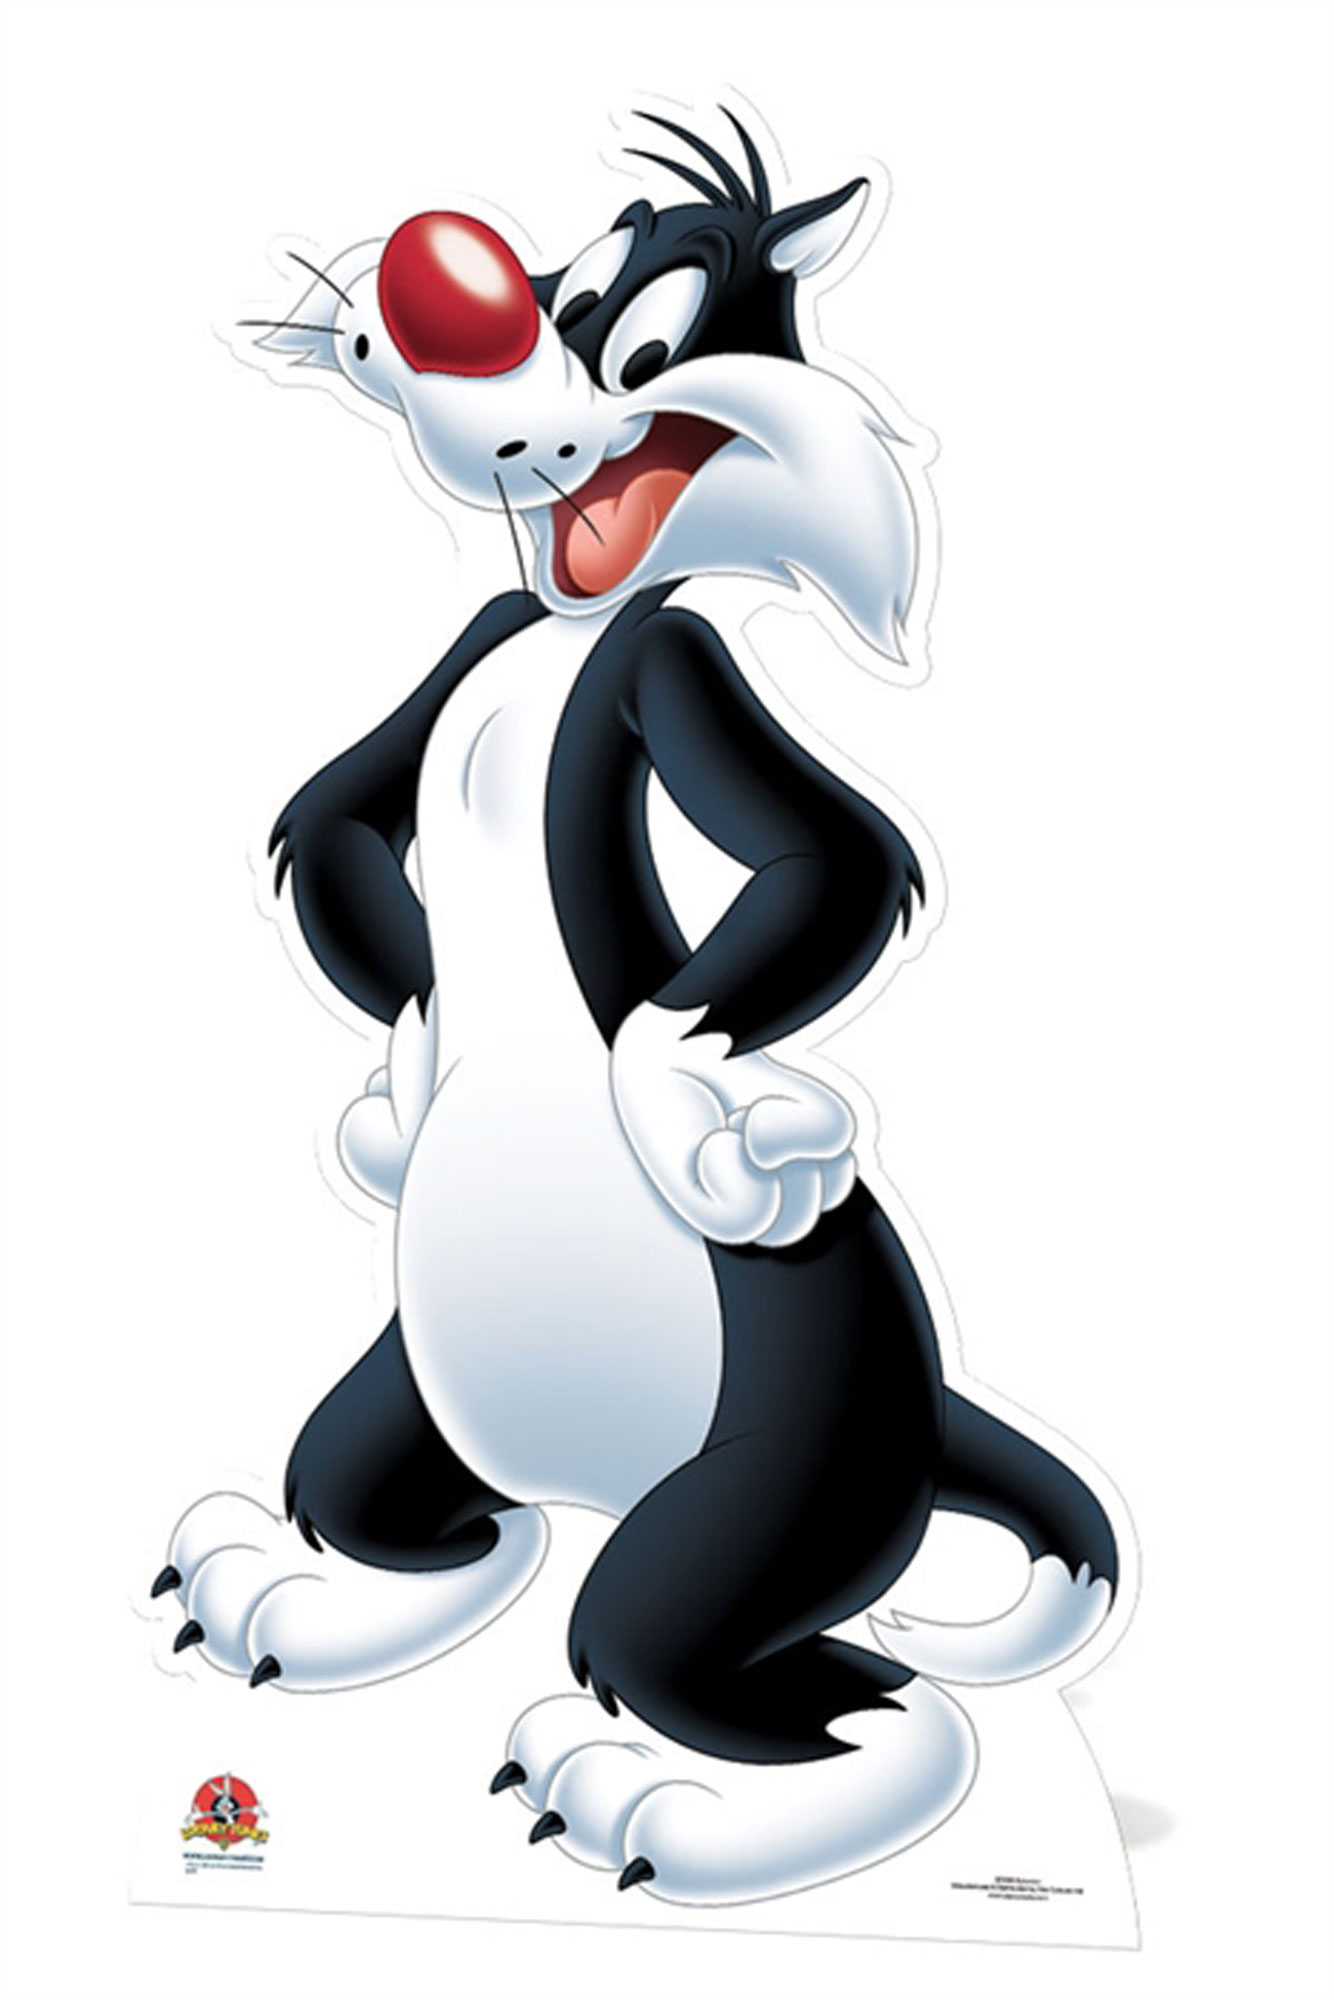 Looney Tunes - Sylvester